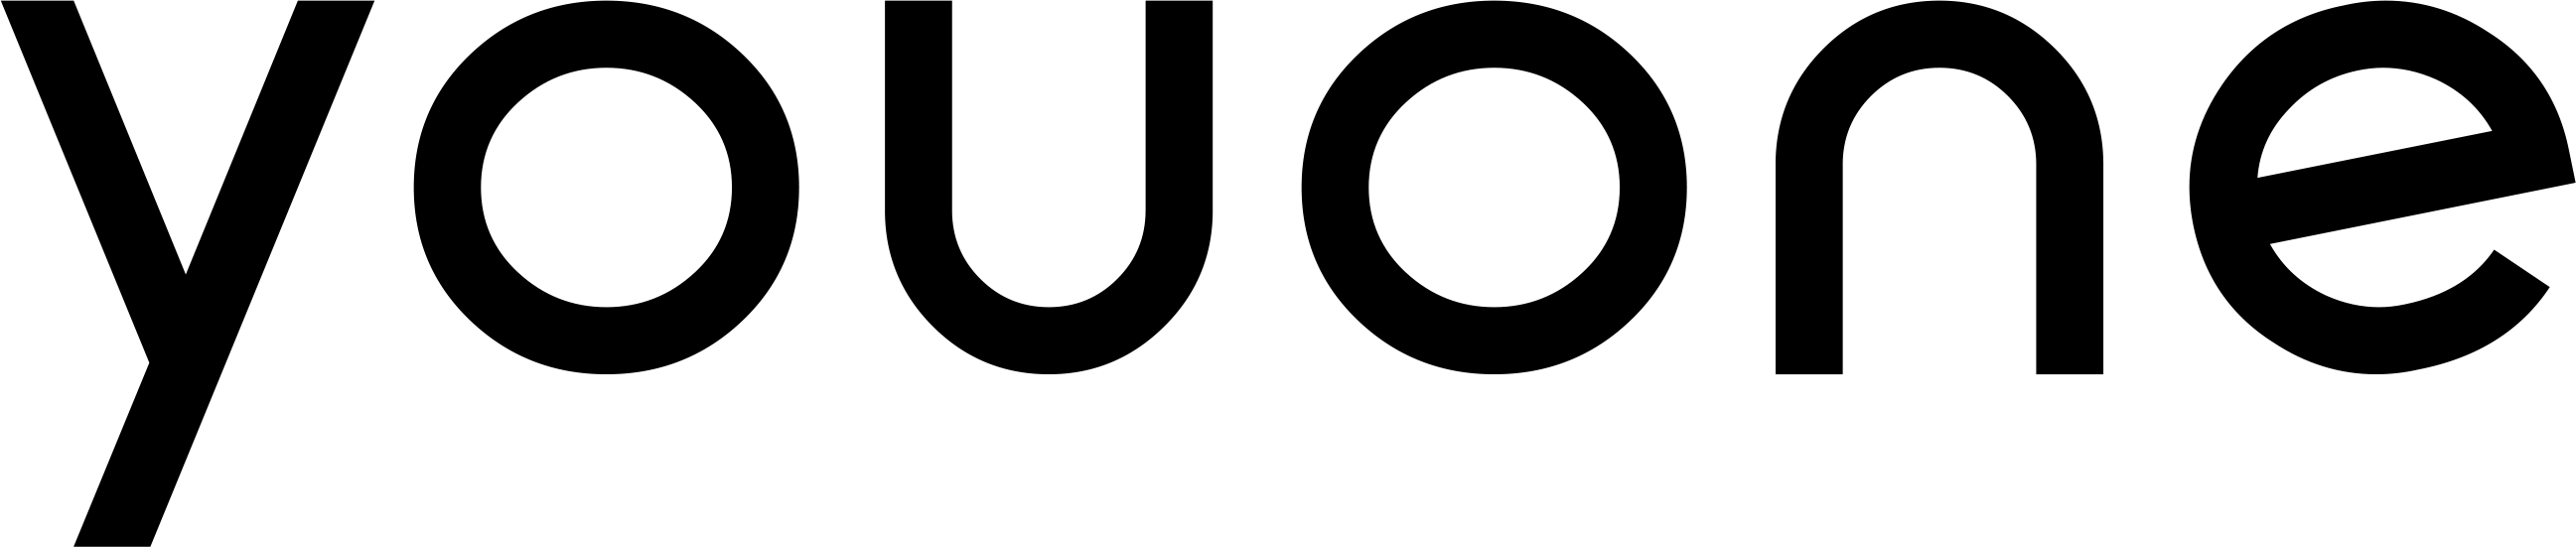 YouOne Logo